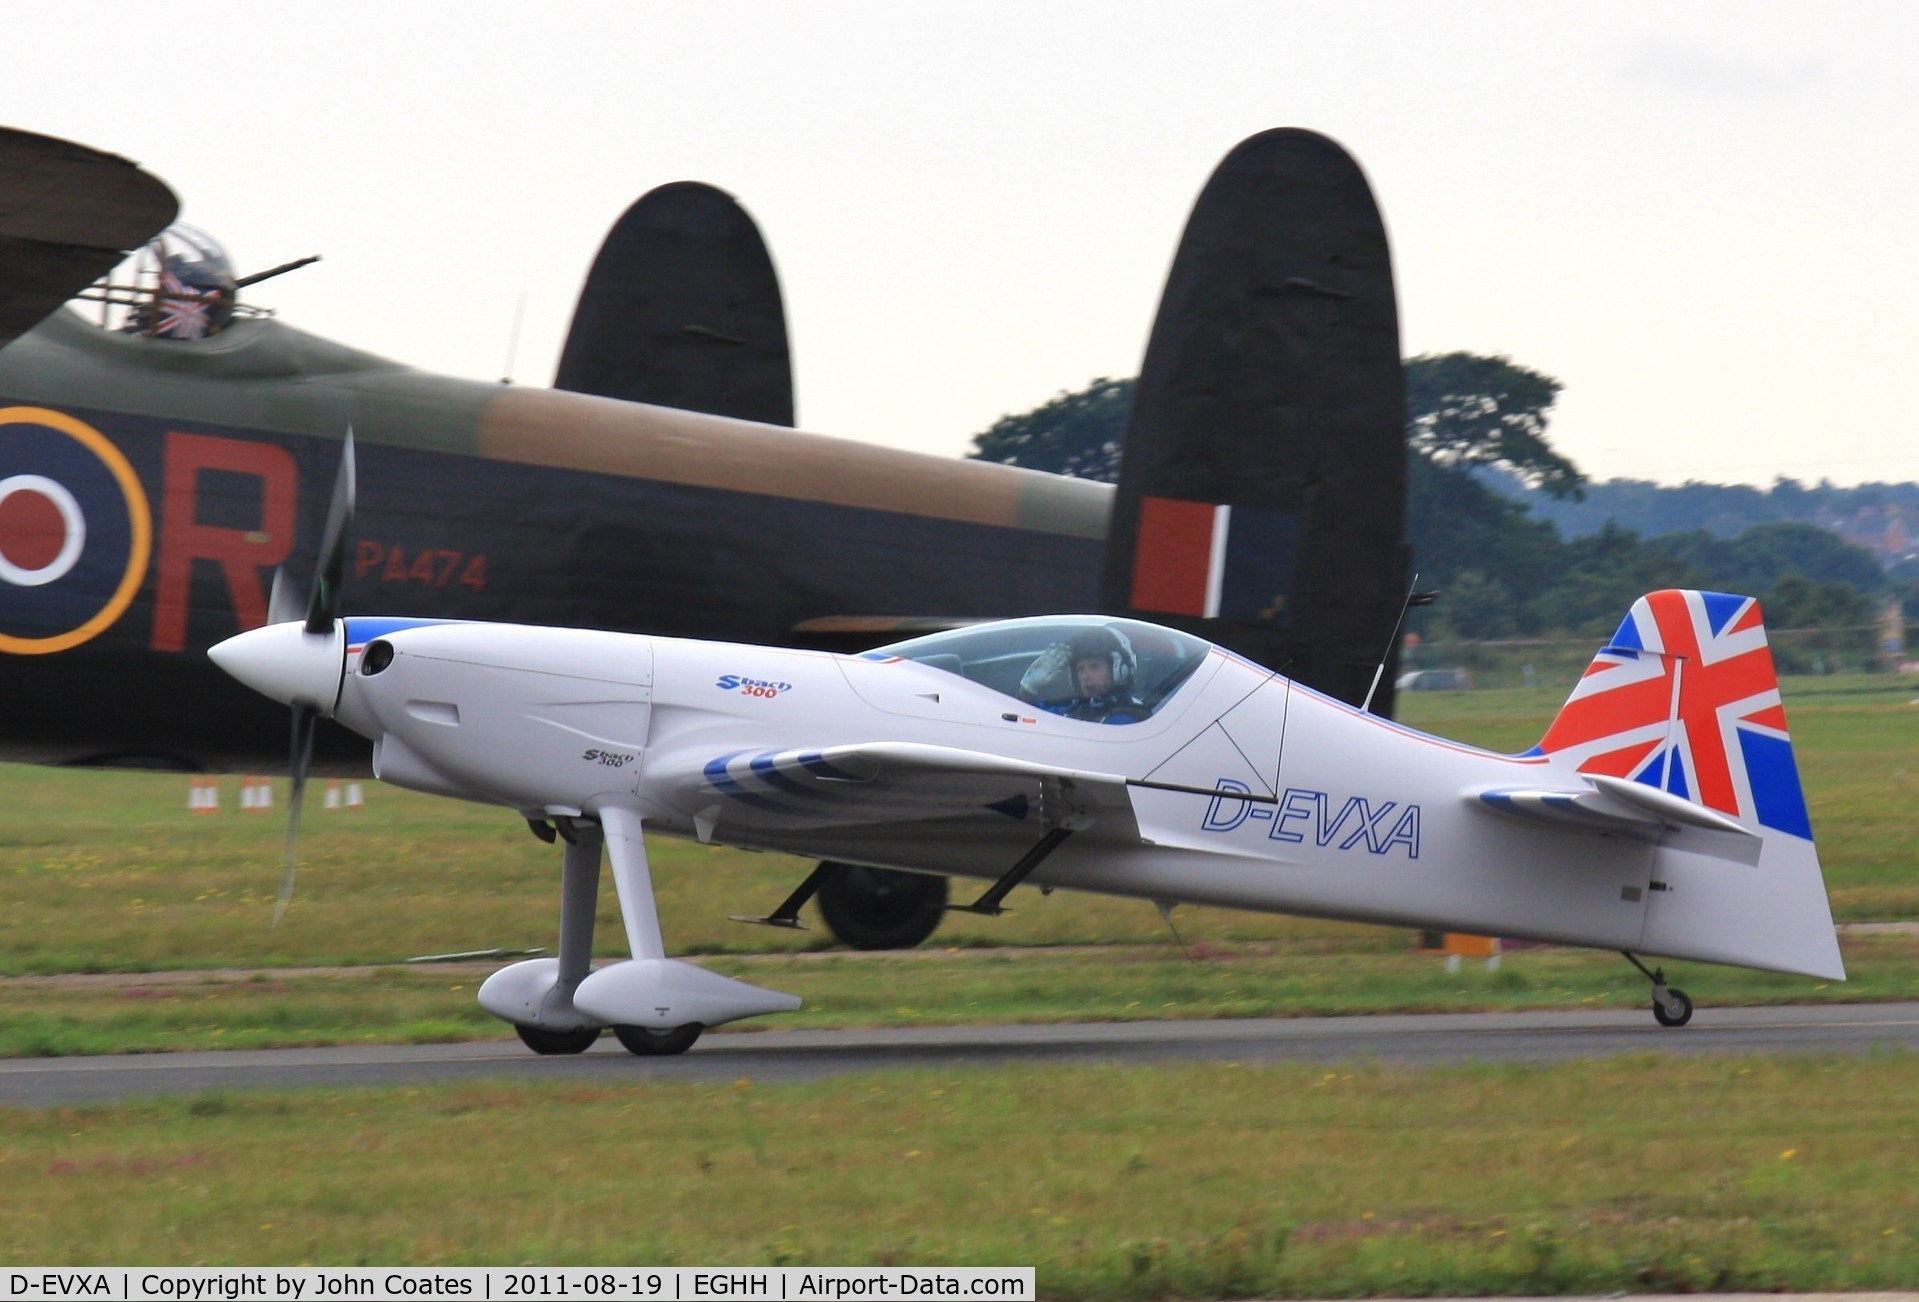 D-EVXA, 2011 XtremeAir XA-41 Sbach 300 C/N 001, Taxiing past the Lancaster